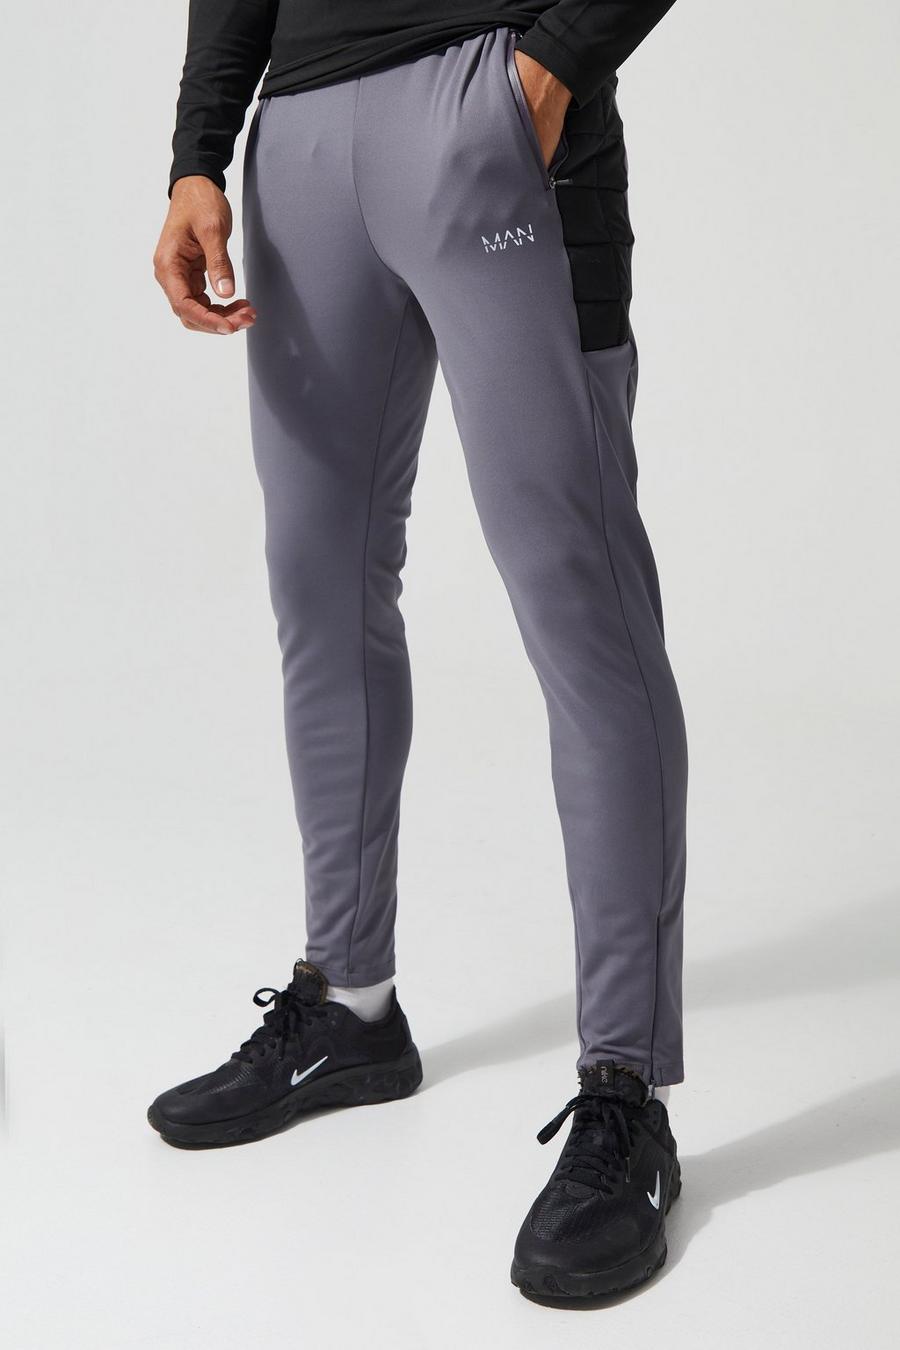 Pantalón deportivo MAN Active pitillo acolchado híbrido, Charcoal grigio